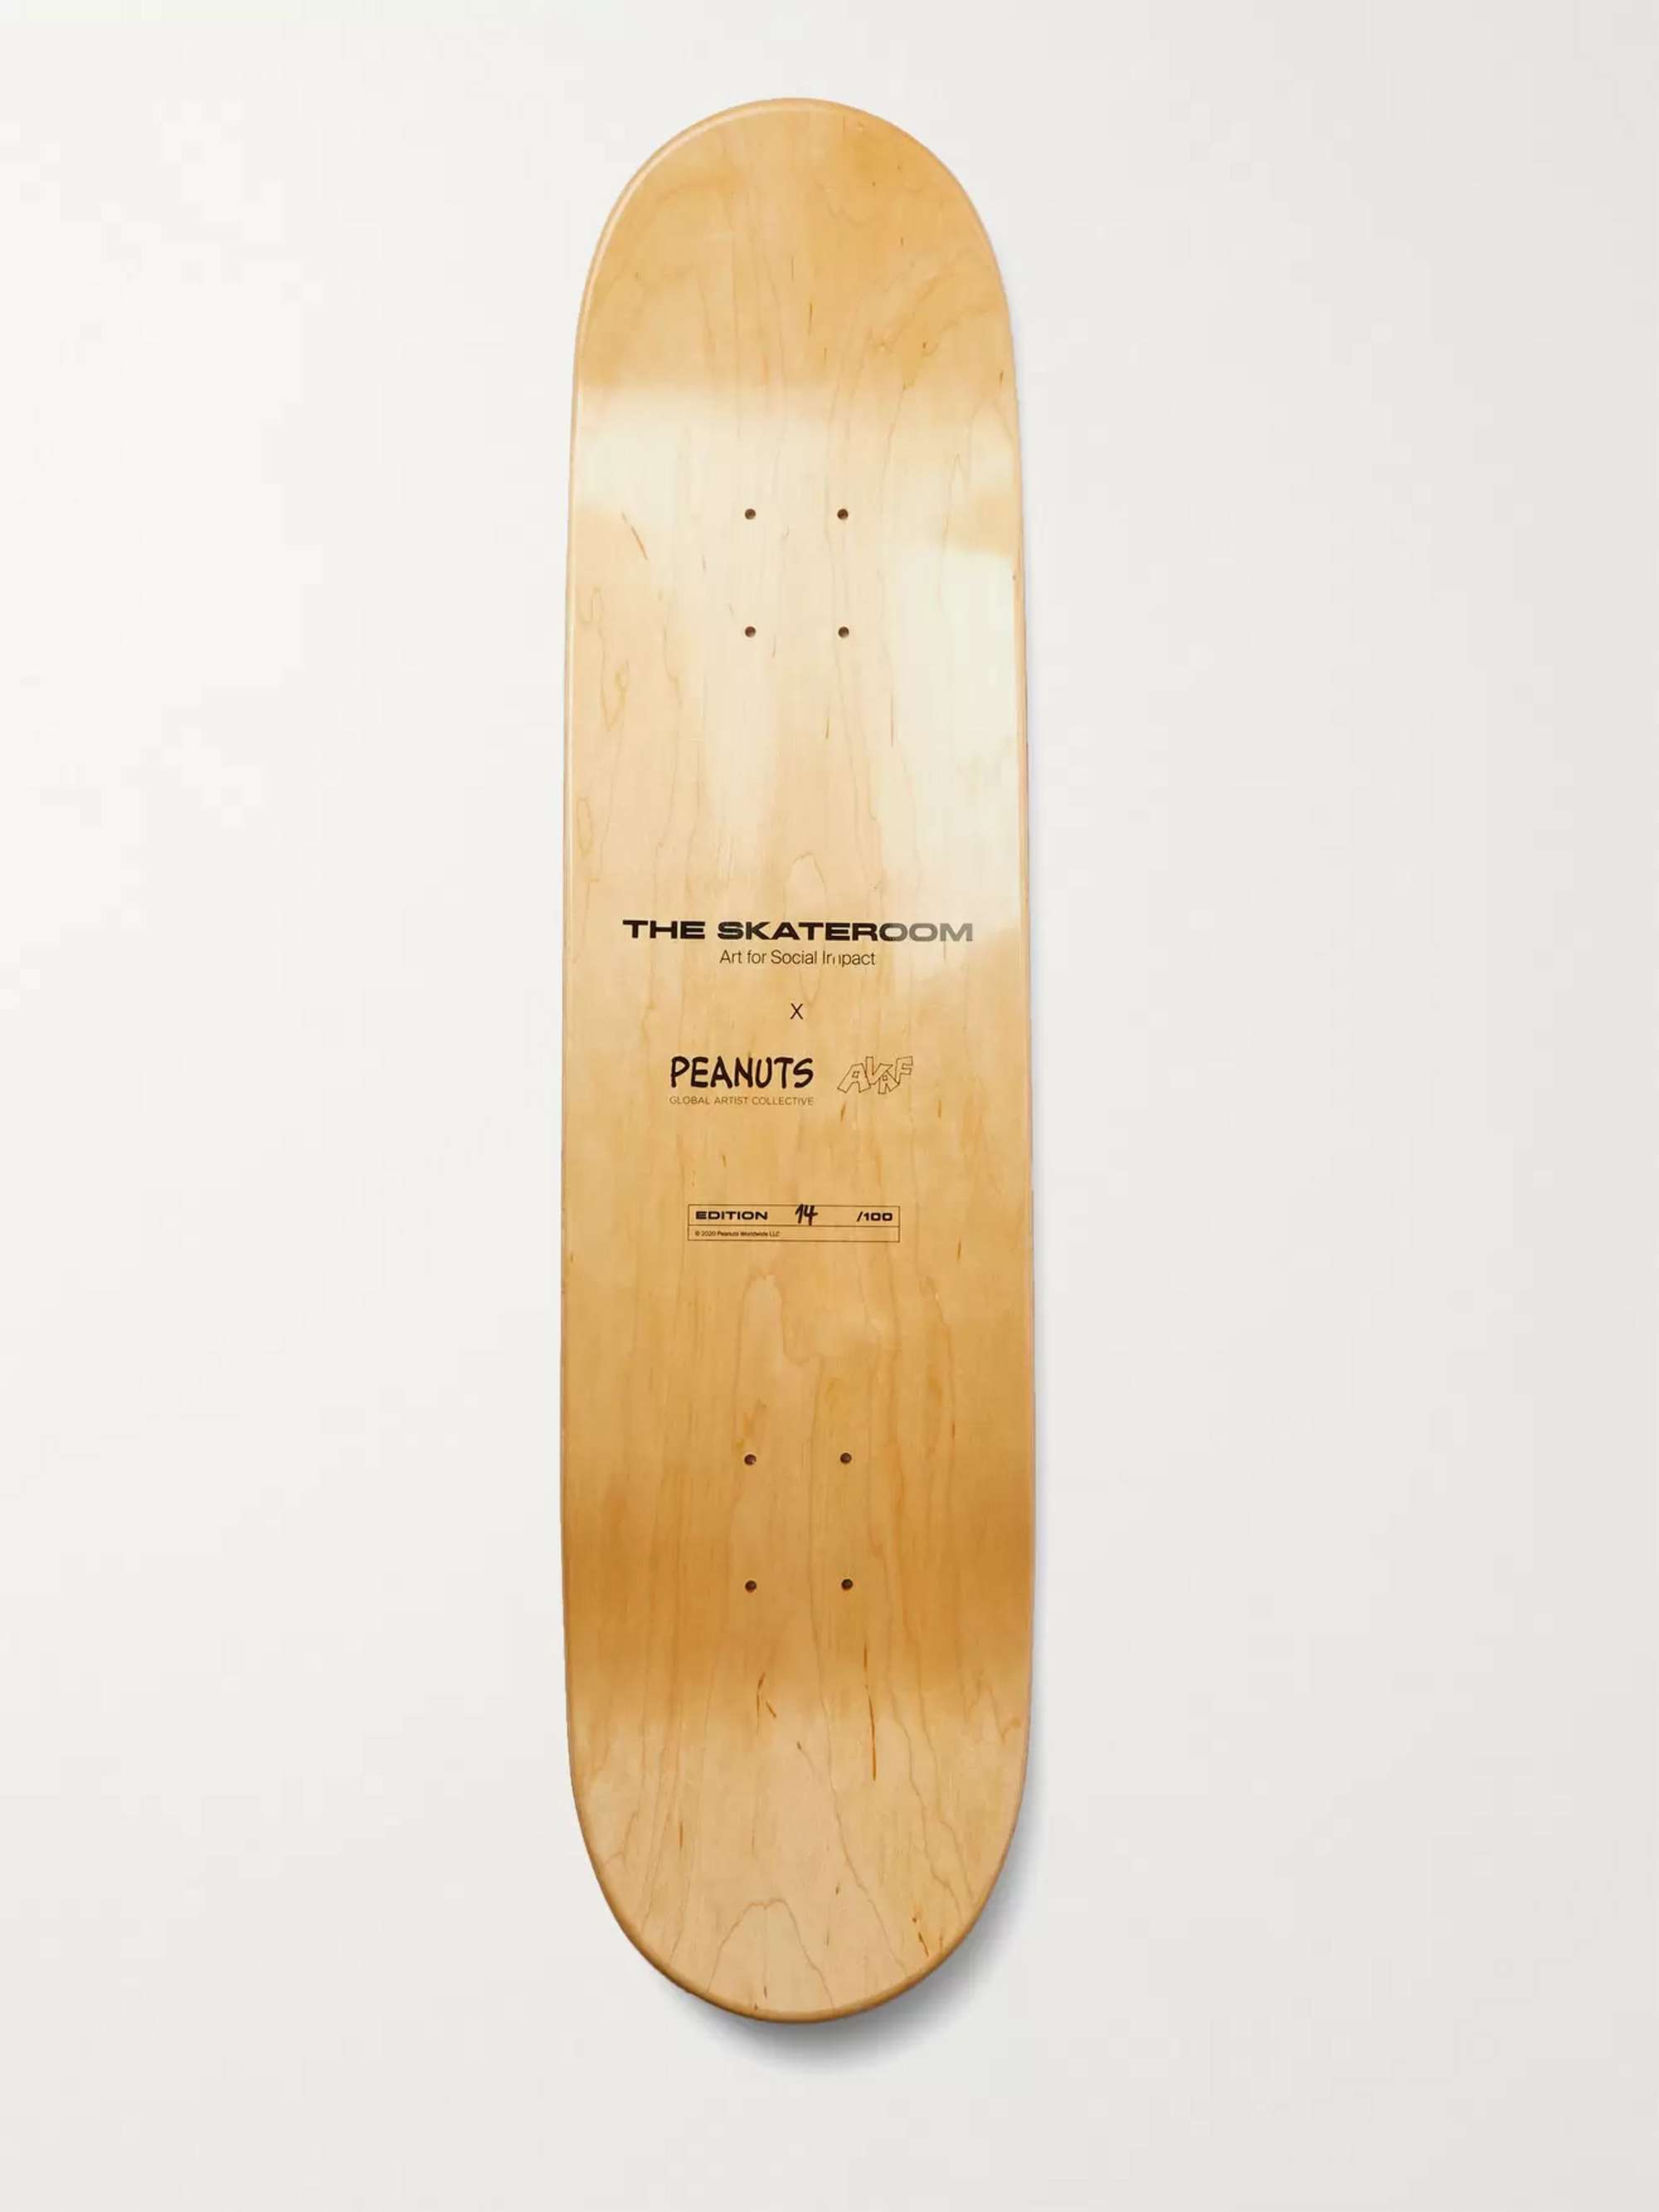 THE SKATEROOM + Peanuts by AVAF Printed Wooden Skateboard